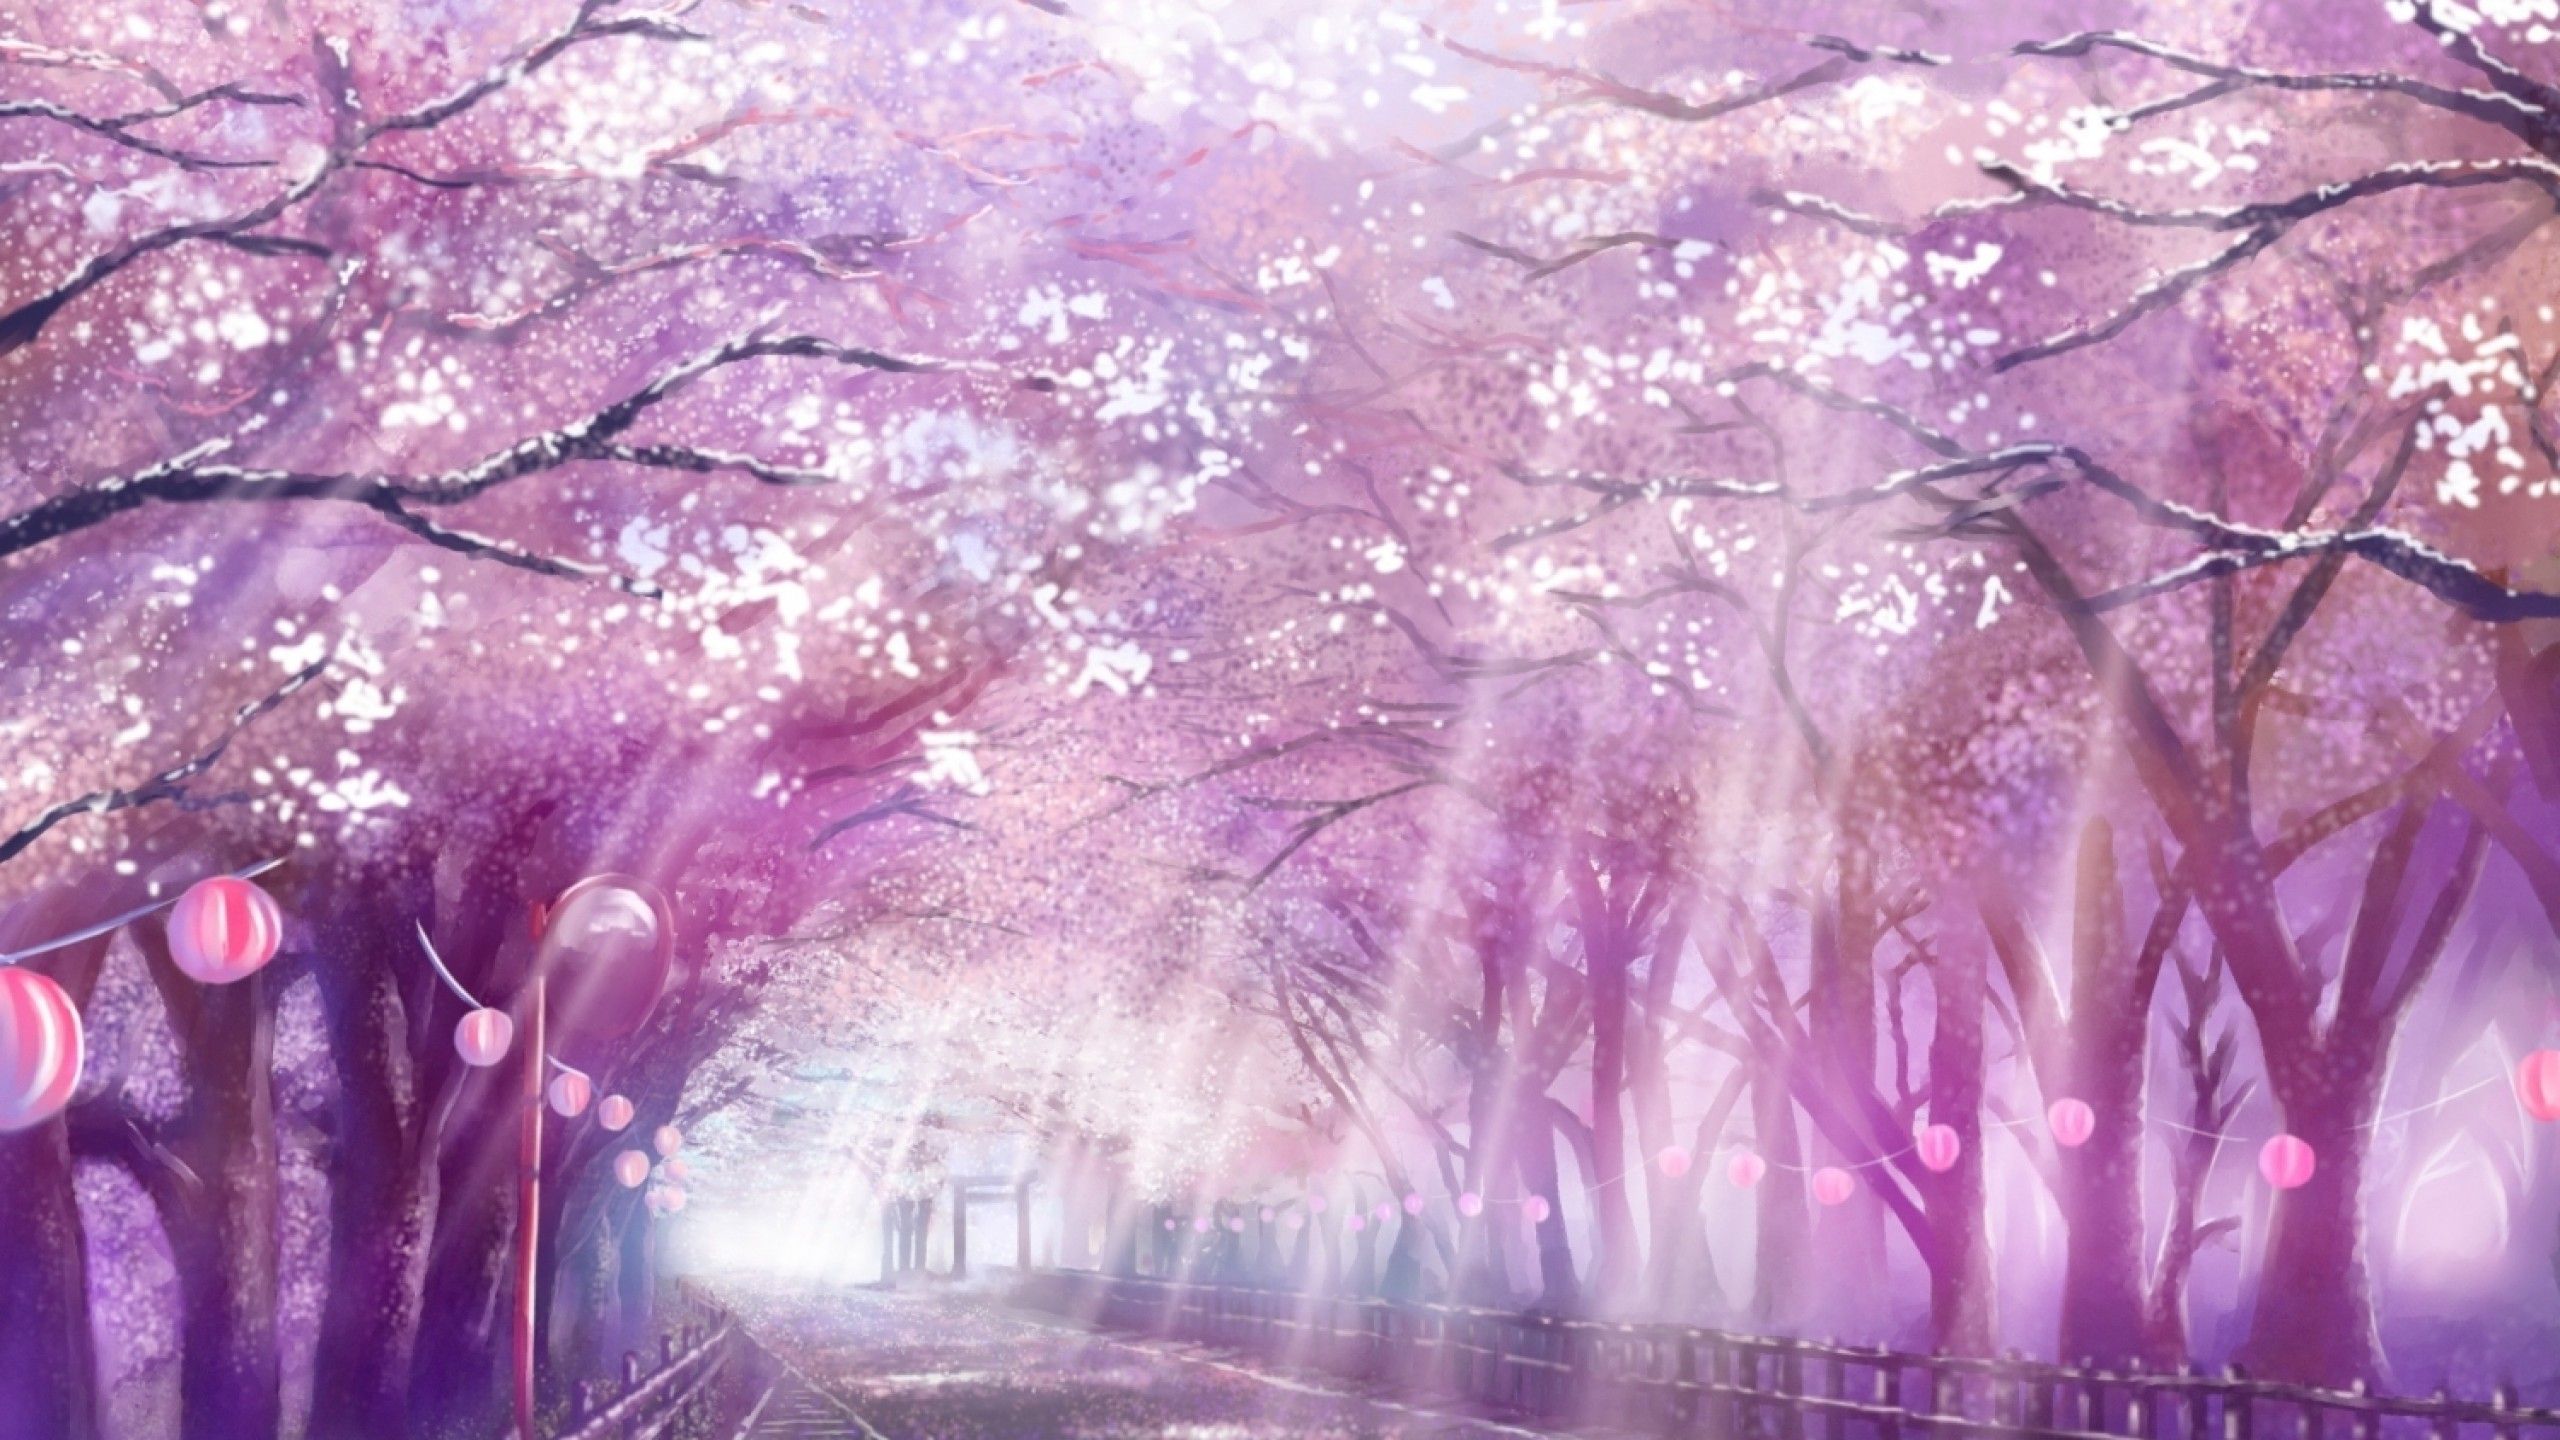 Anime Landscape, Scenic, Sakura Blossom, Cherry, Path, Sunlight. Scenery wallpaper, Anime scenery, Scenery background